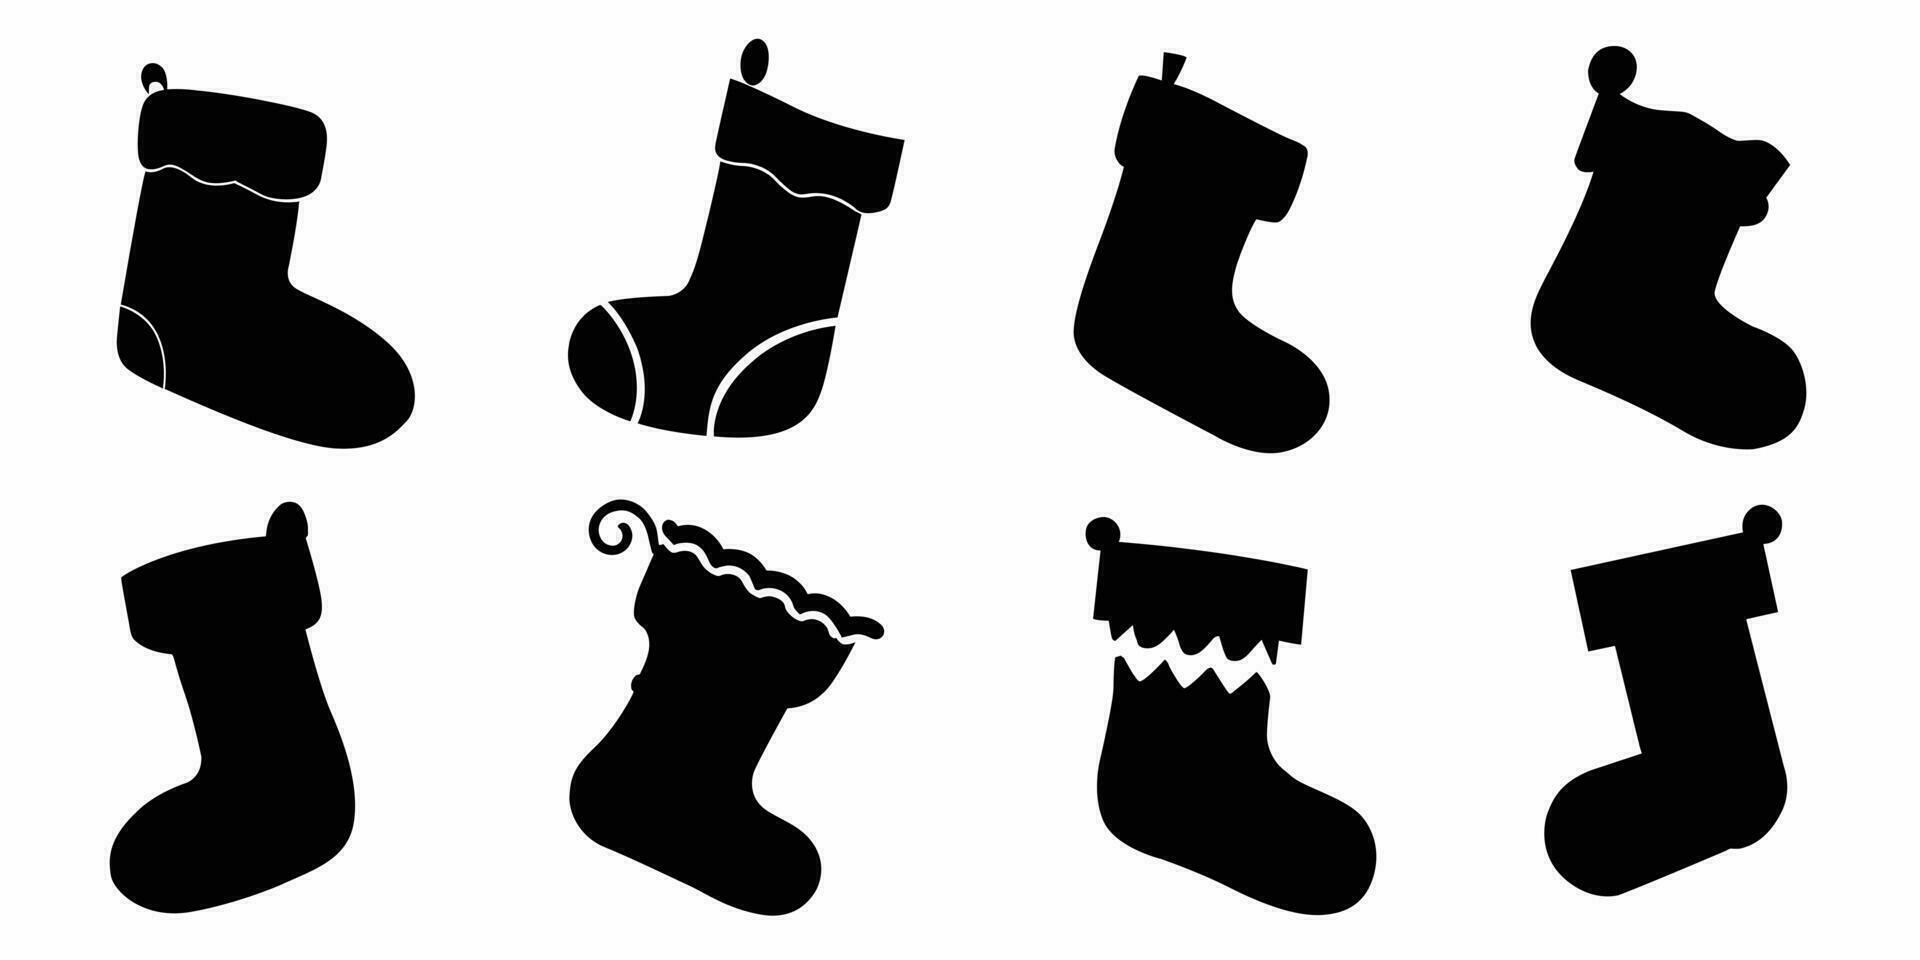 Set of Christmas stockings silhouettes. Christmas socks silhouettes. Vector illustration